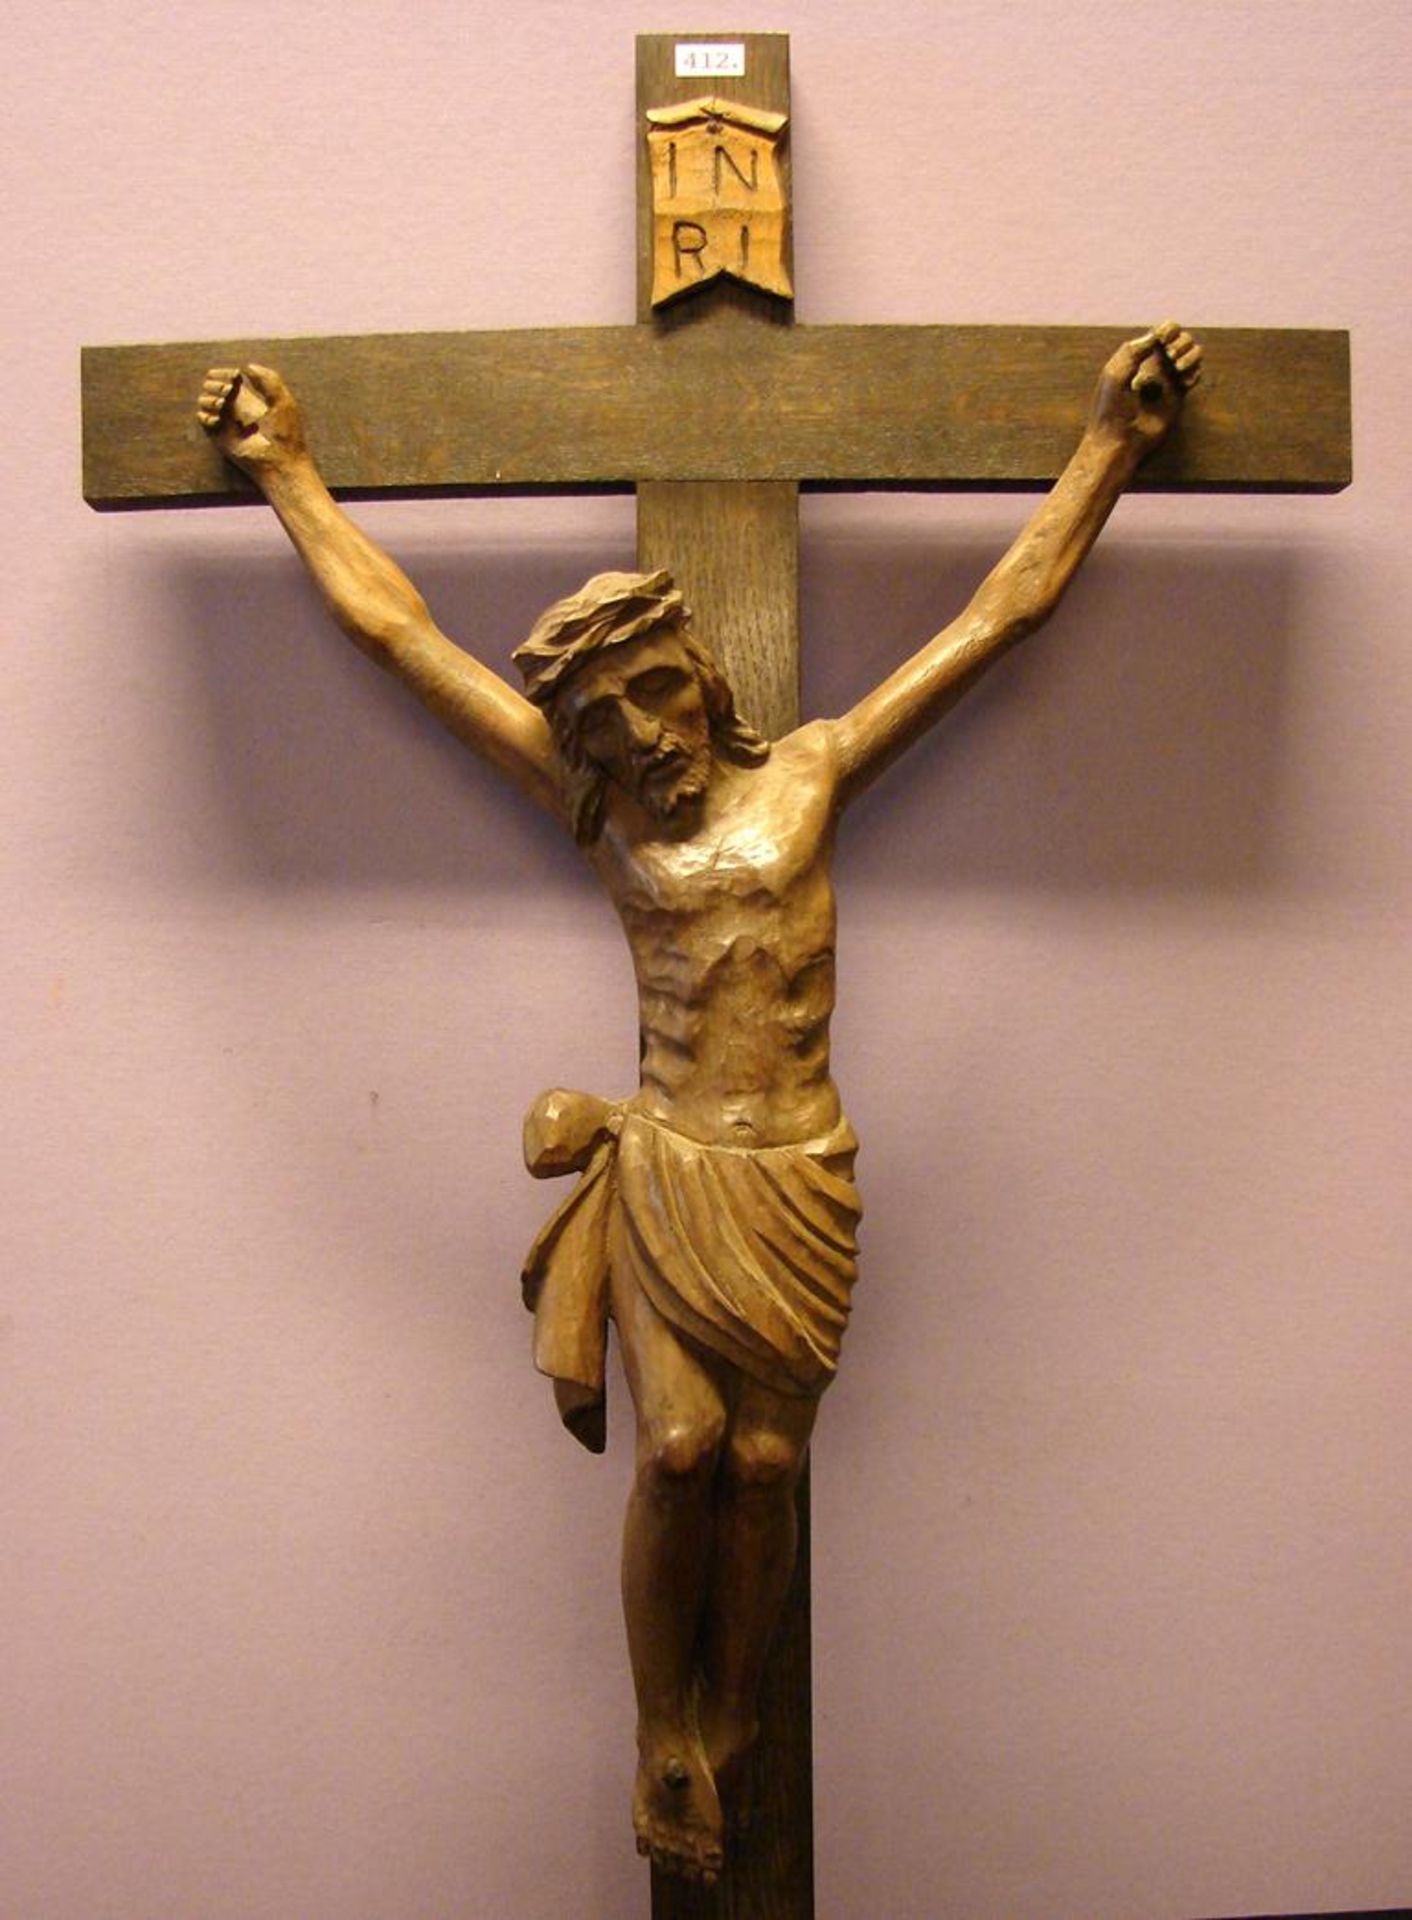 Jesus am Kreuz, Holz, geschnitzt, ca. 73 cm- - -22.00 % buyer's premium on the hammer price19.00 %